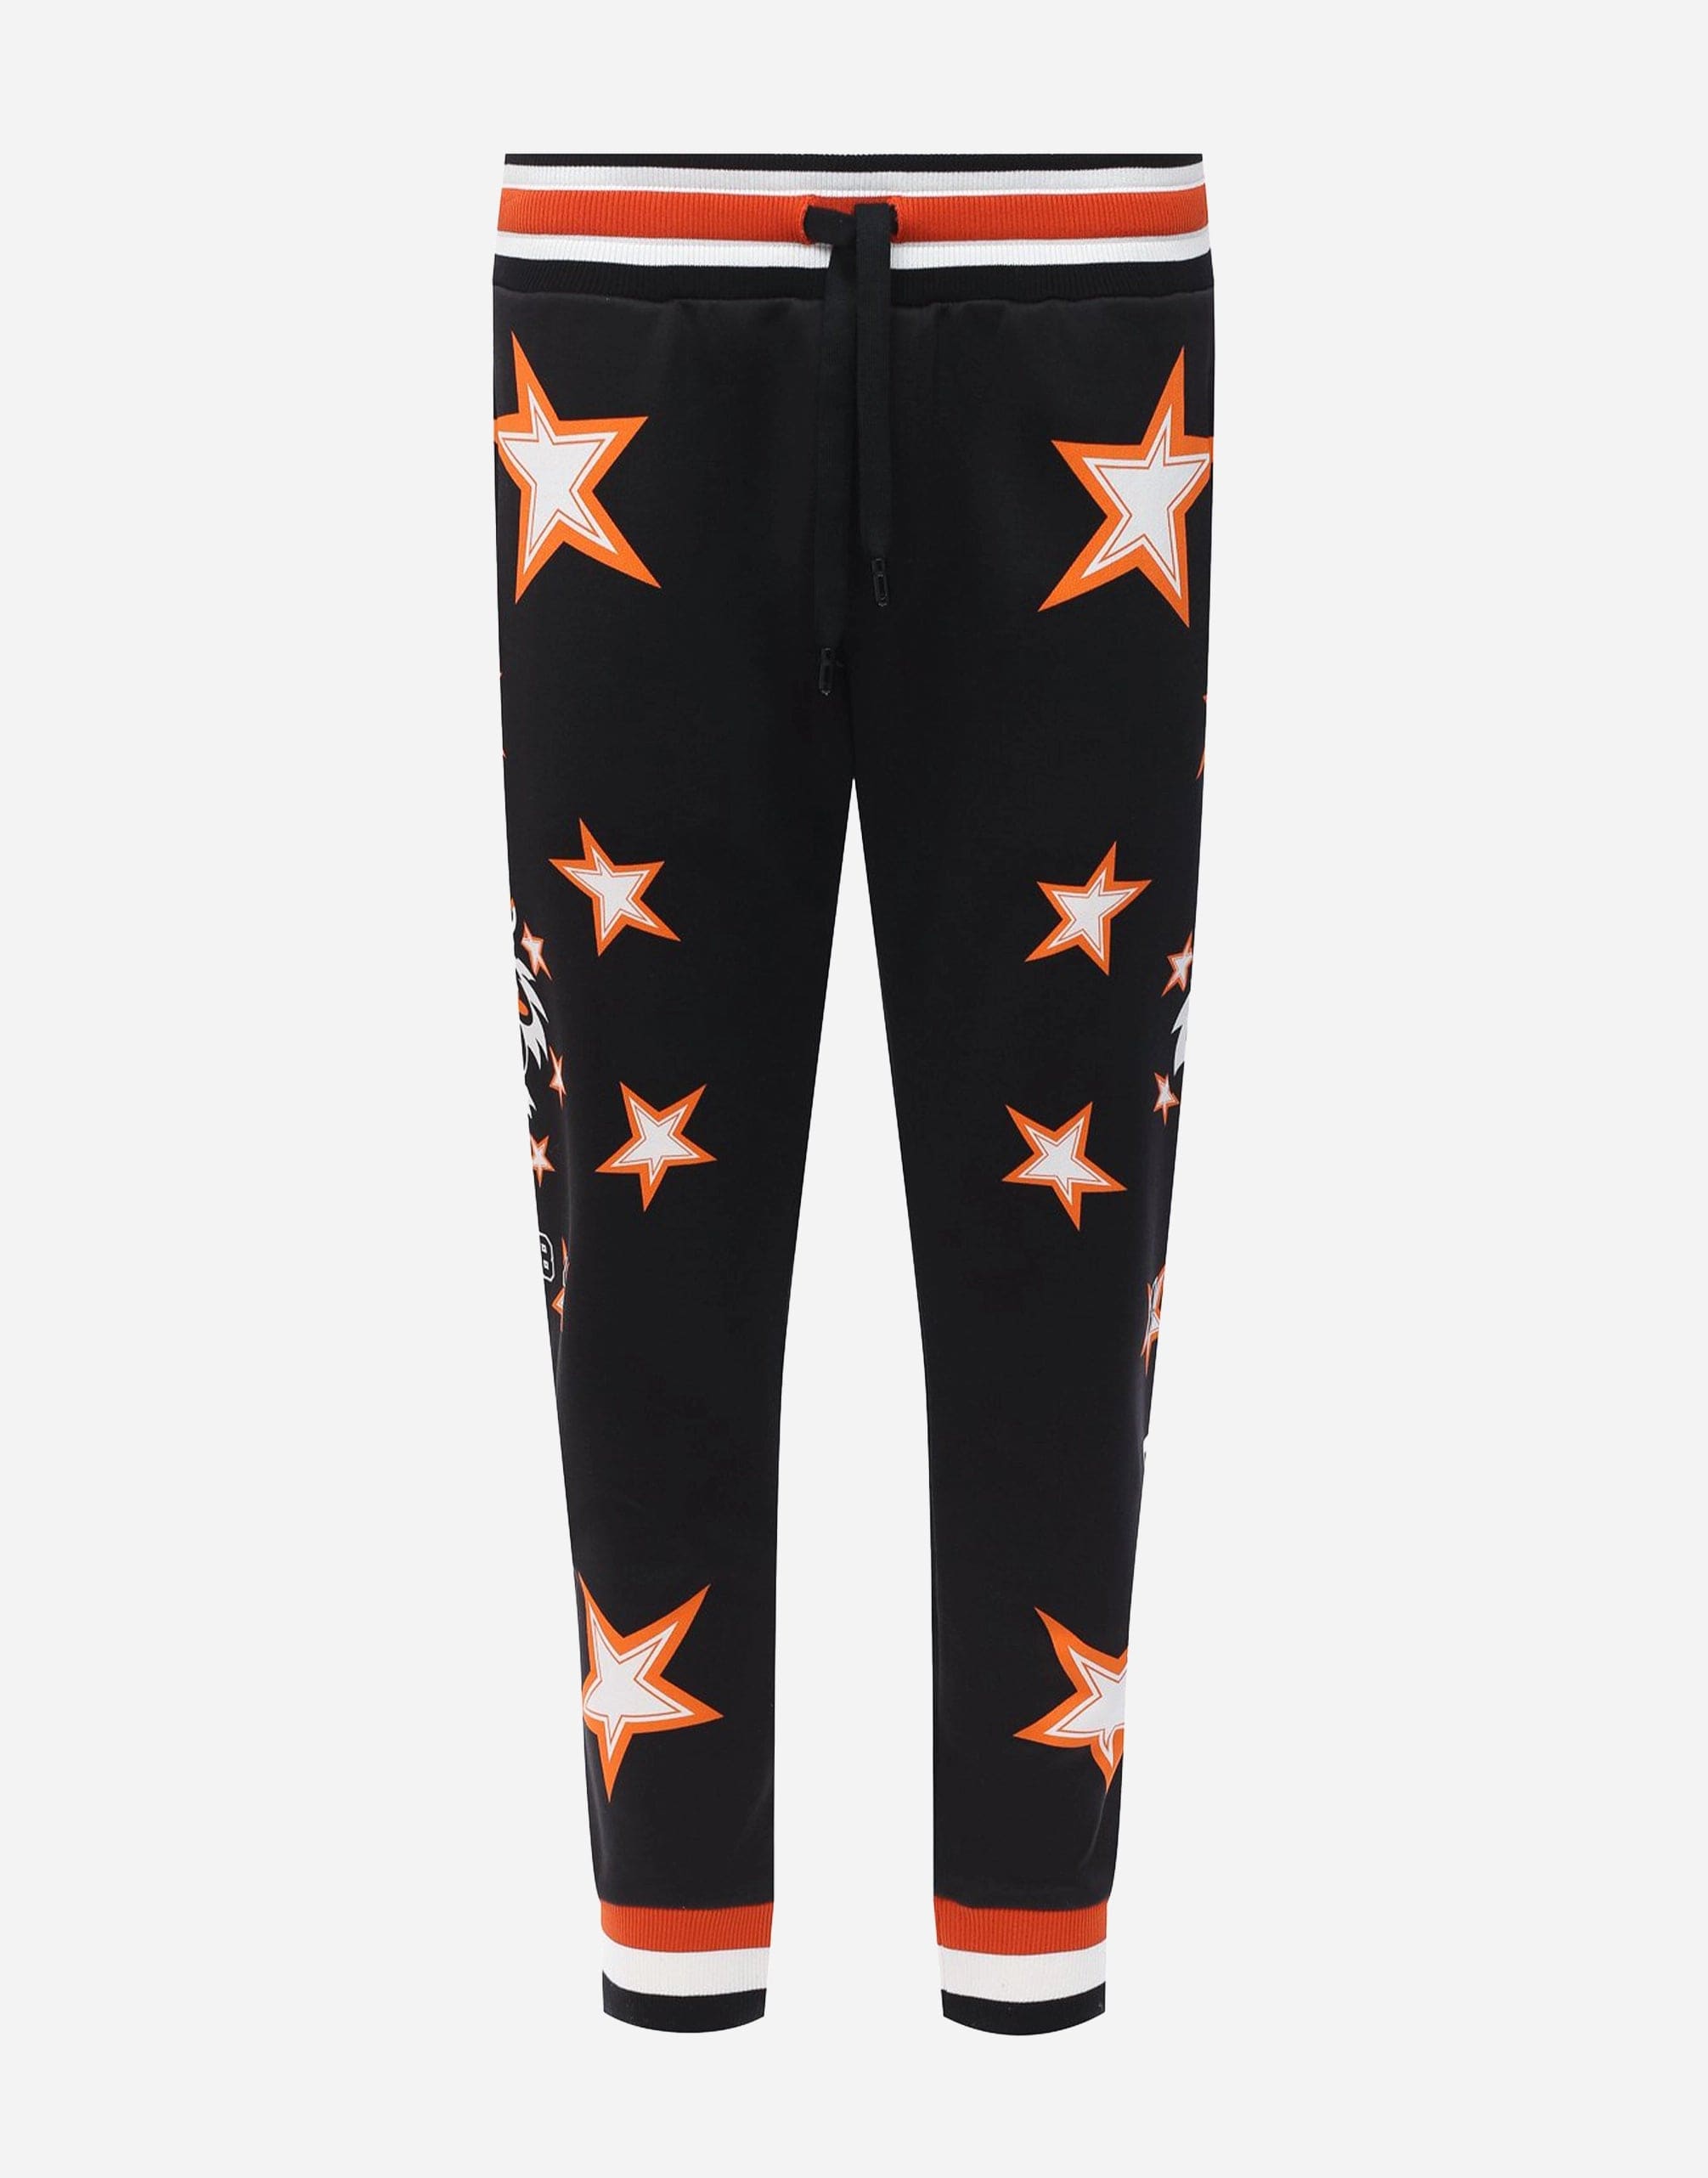 Dolce & Gabbana Star-Print Jogging Pants